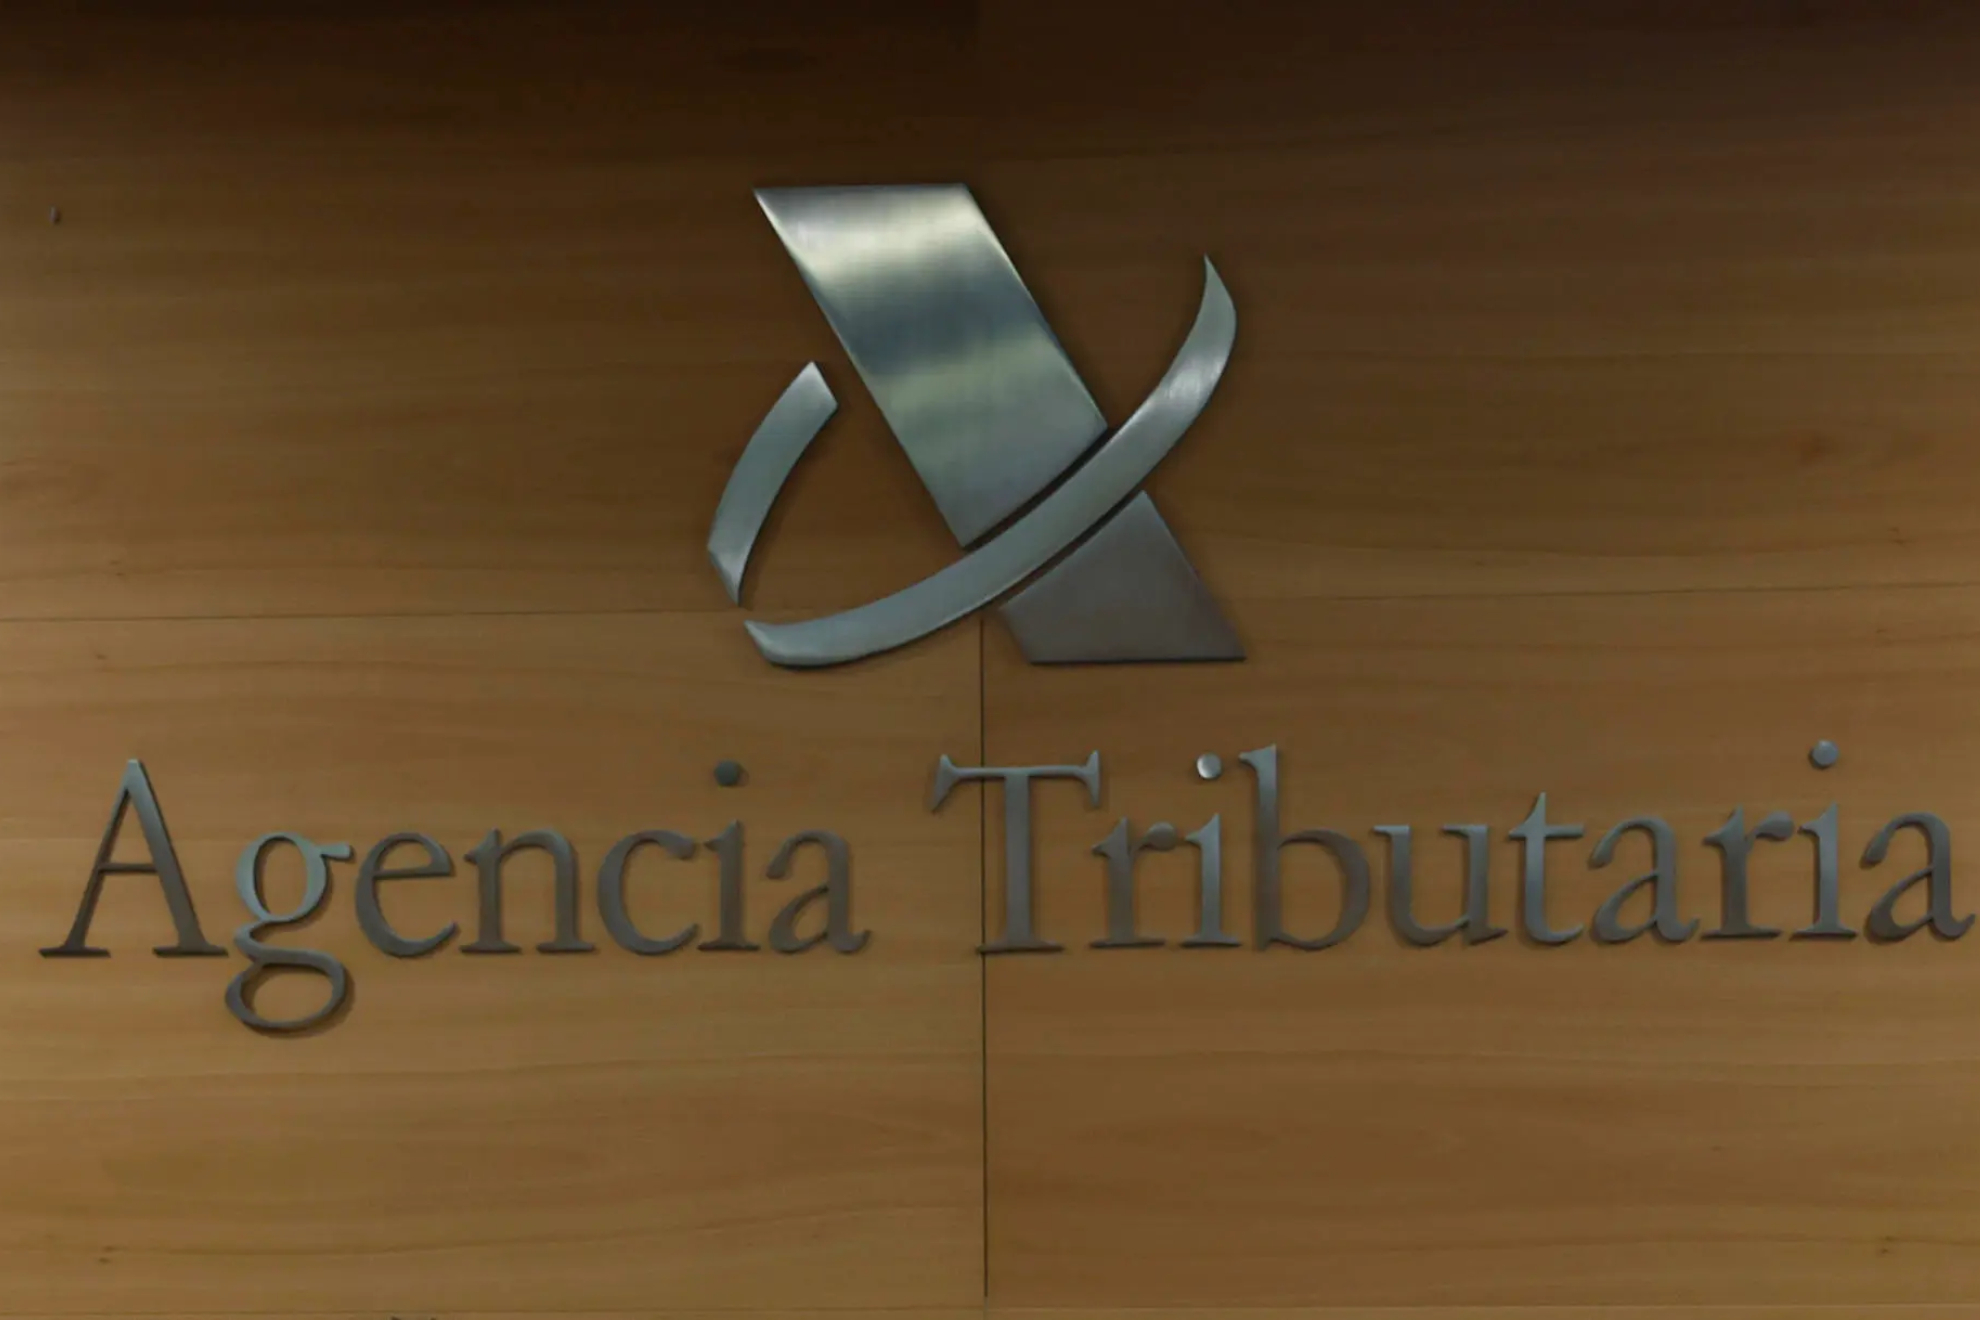 Agencia Tributaria.